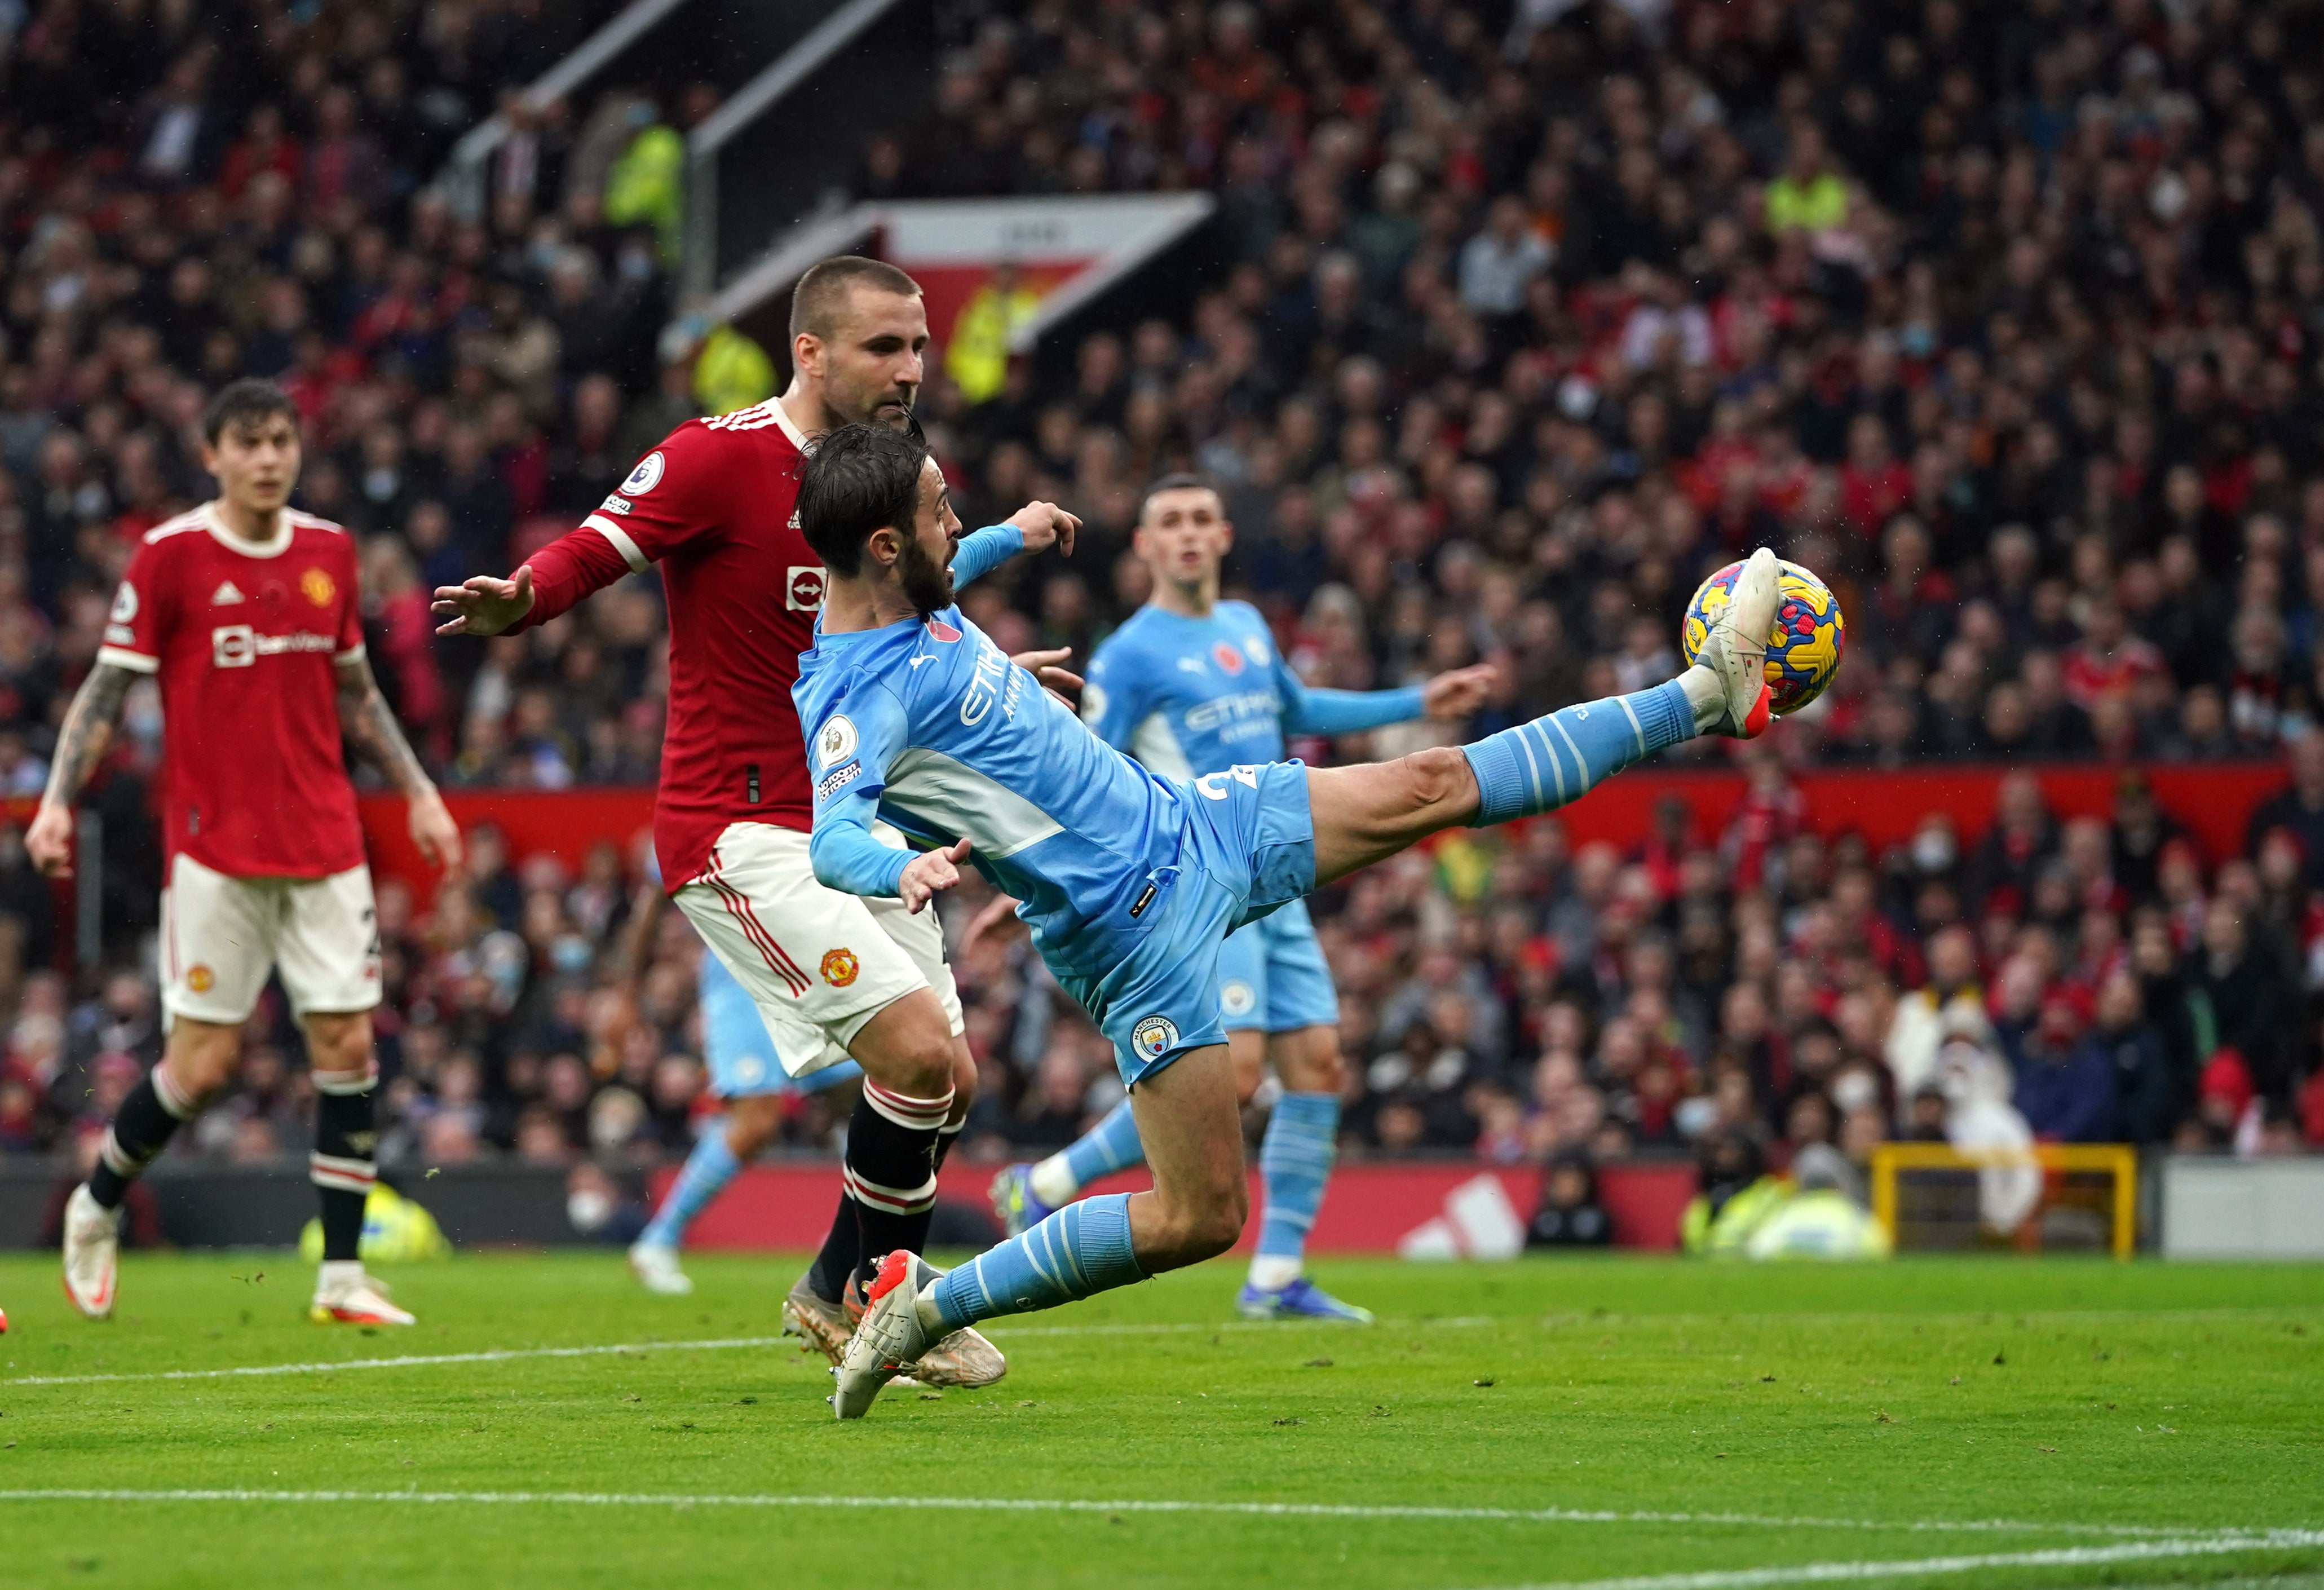 Bernardo Silva’s goal heaped more woe on Manchester United at Old Trafford (Martin Rickett/PA)